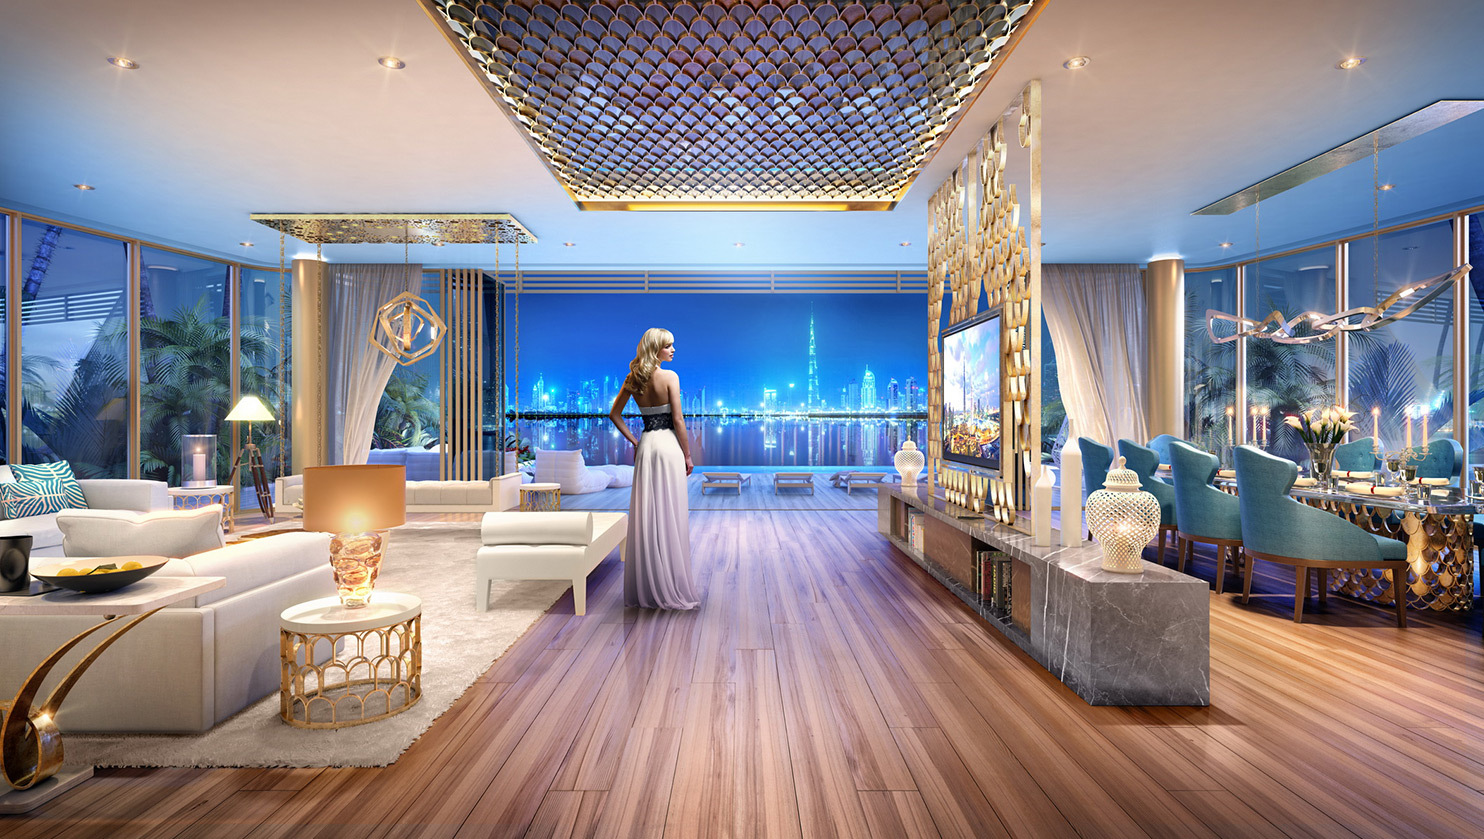 Sweden Palaces Luxury Villas in Dubai